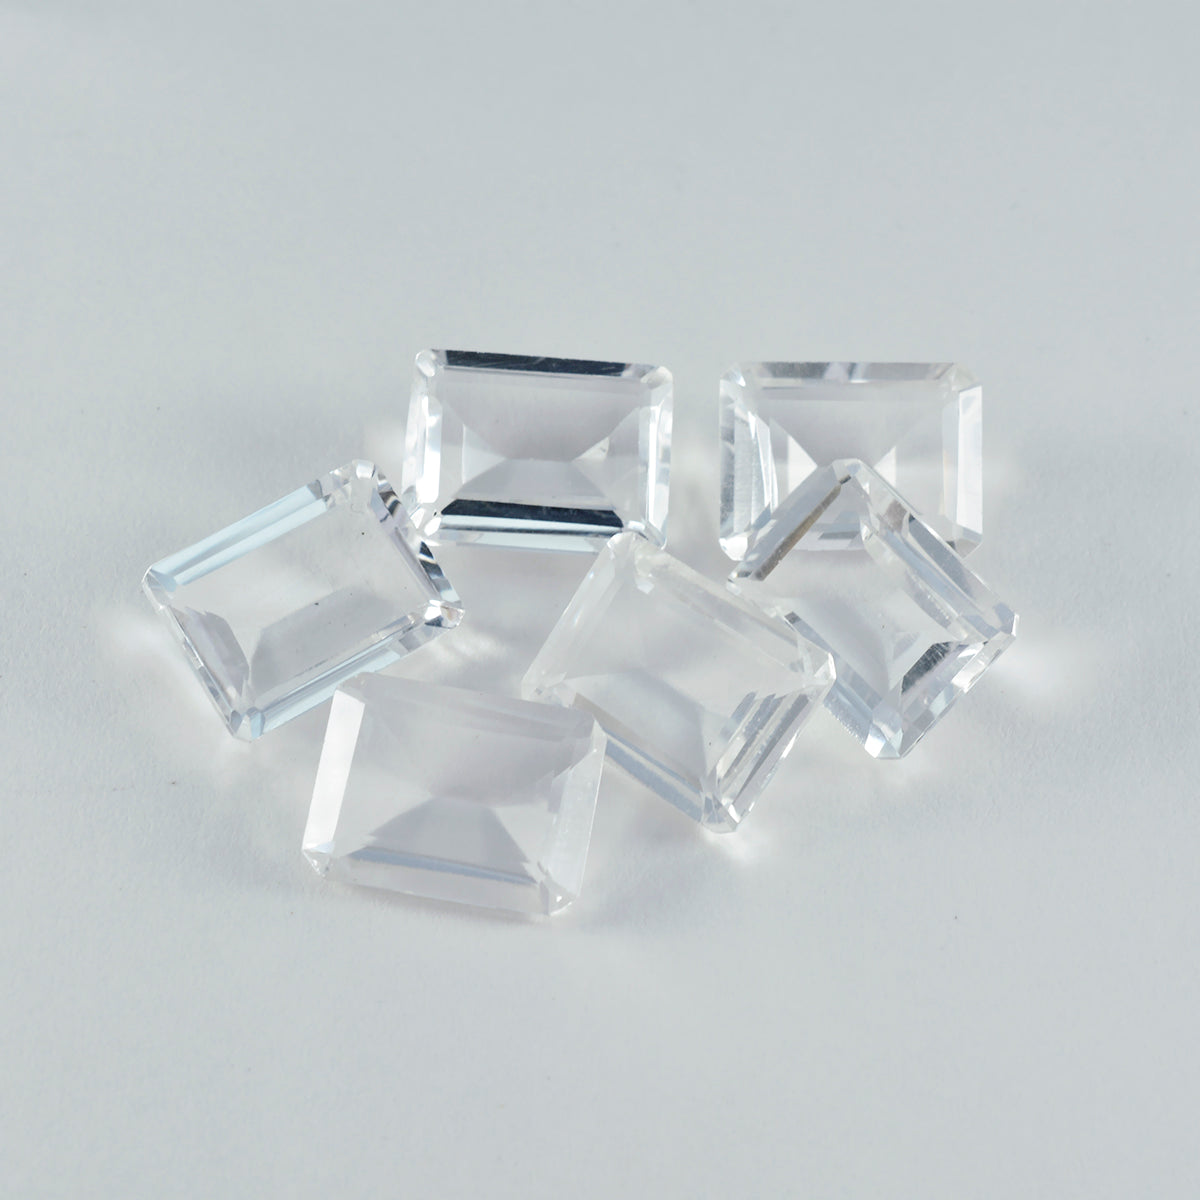 Riyogems 1PC Wit Kristal Kwarts Gefacetteerd 10x14 mm Achthoekige Vorm Schoonheid Kwaliteit Edelsteen